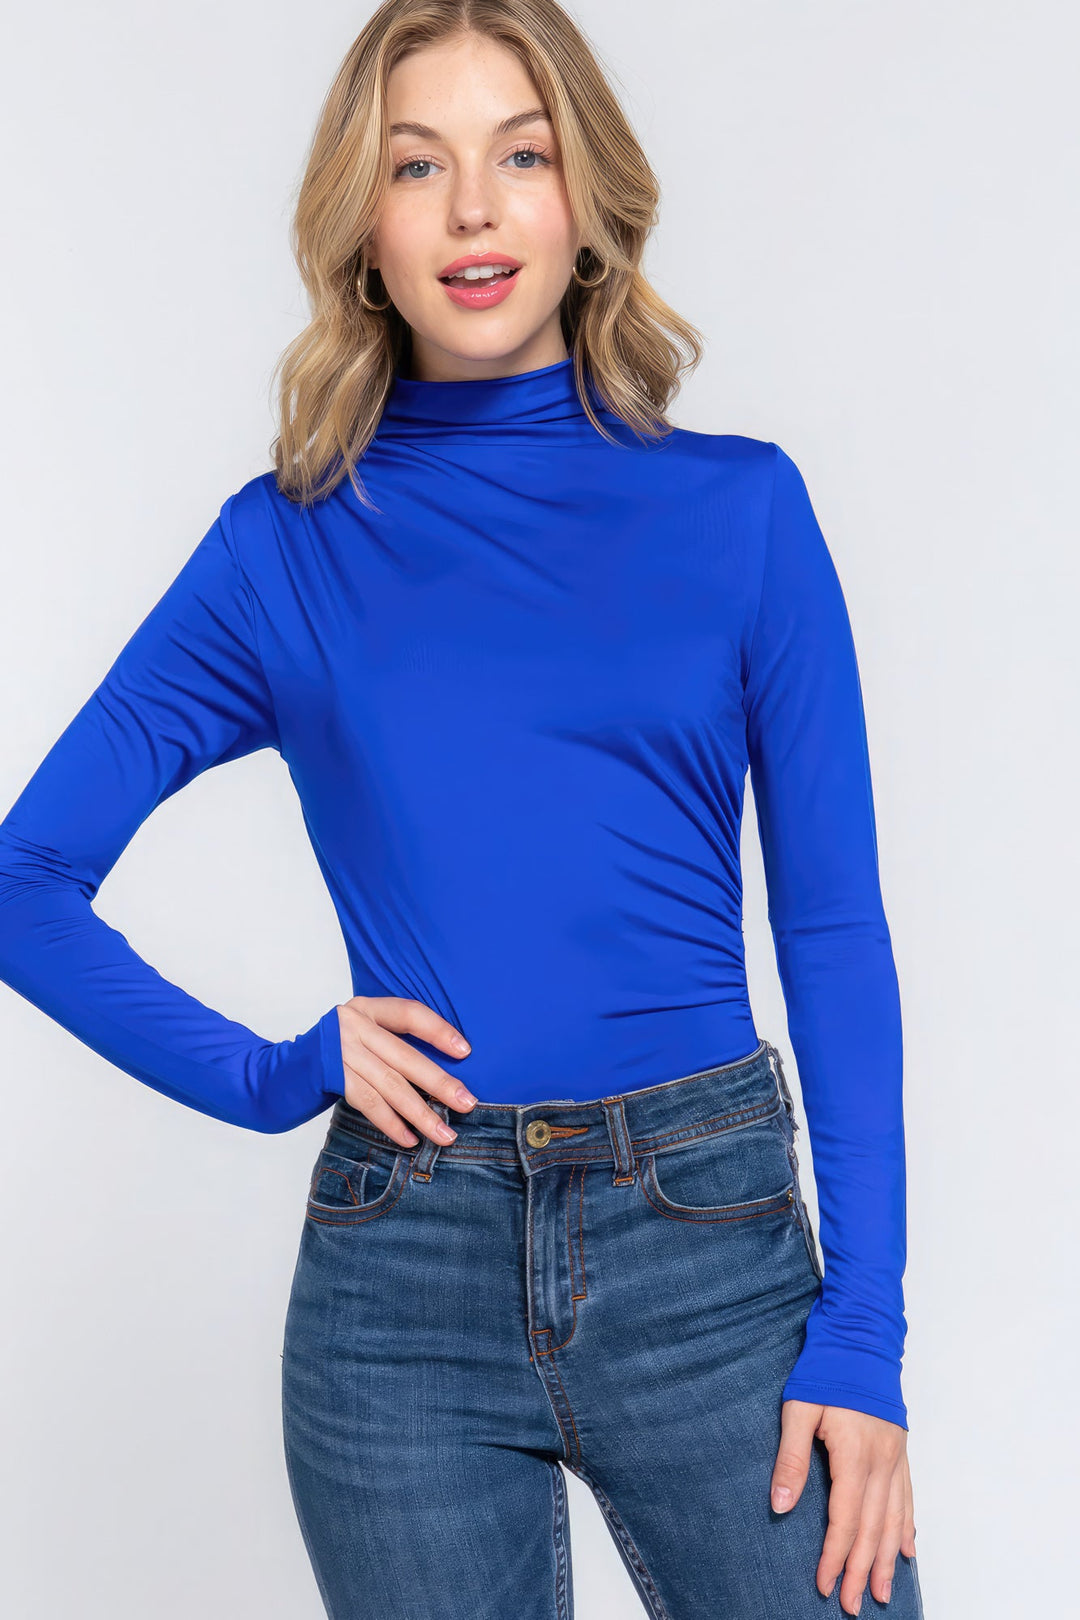 The802Gypsy  bodysuit S / blue ❤GYPSY LOVE-Long Sleeve High Neck Knit Bodysuit